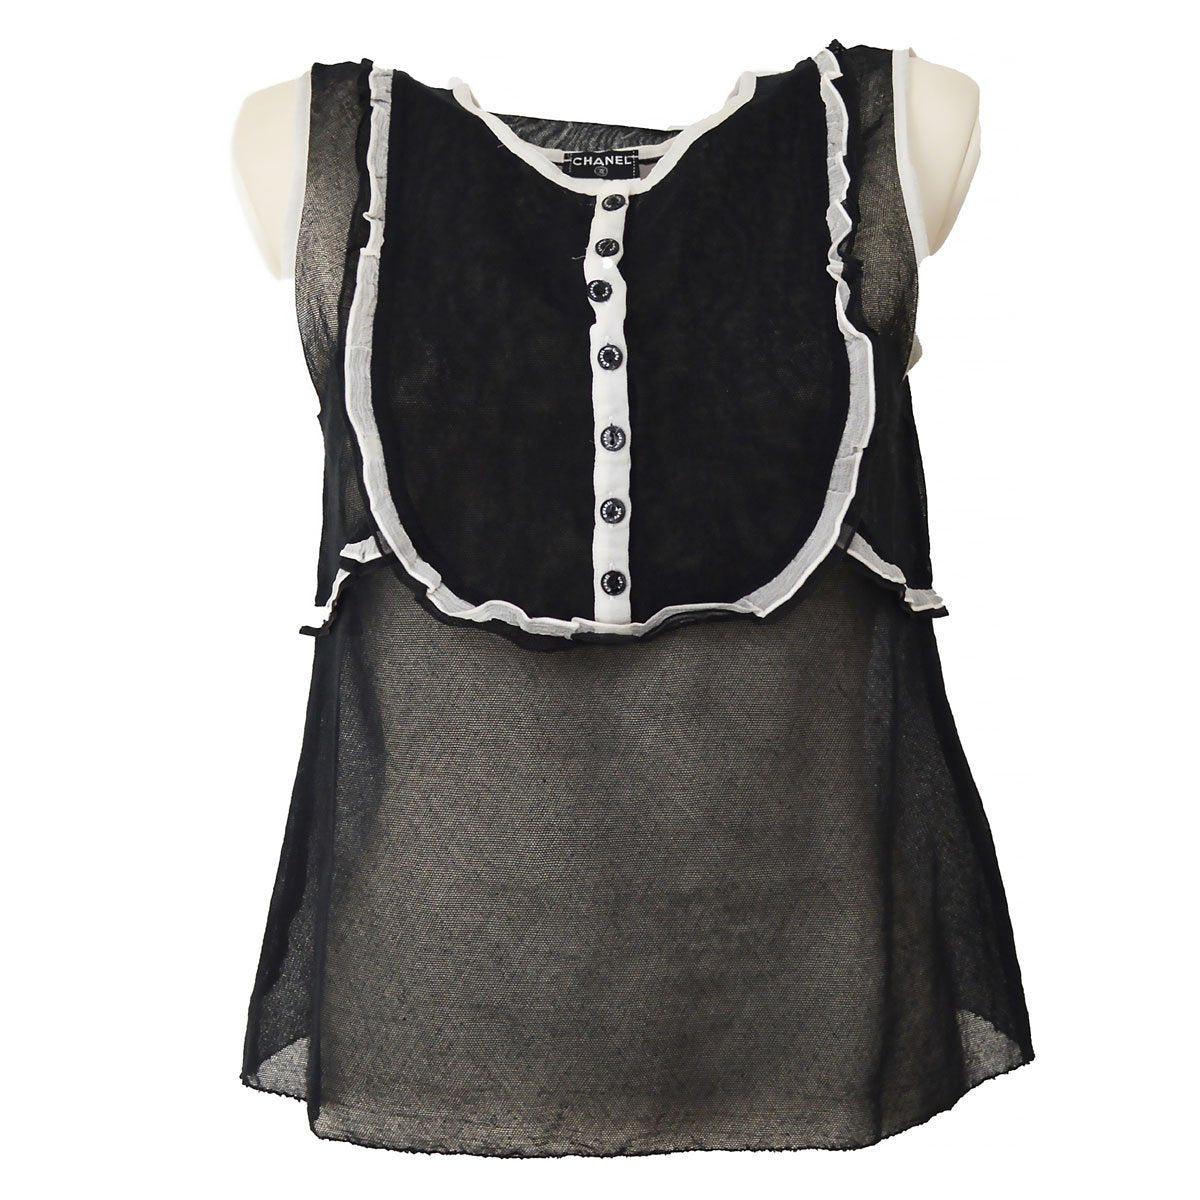 Chanel Black/White Cotton Blend Lace Sleeveless Top Size 2/36